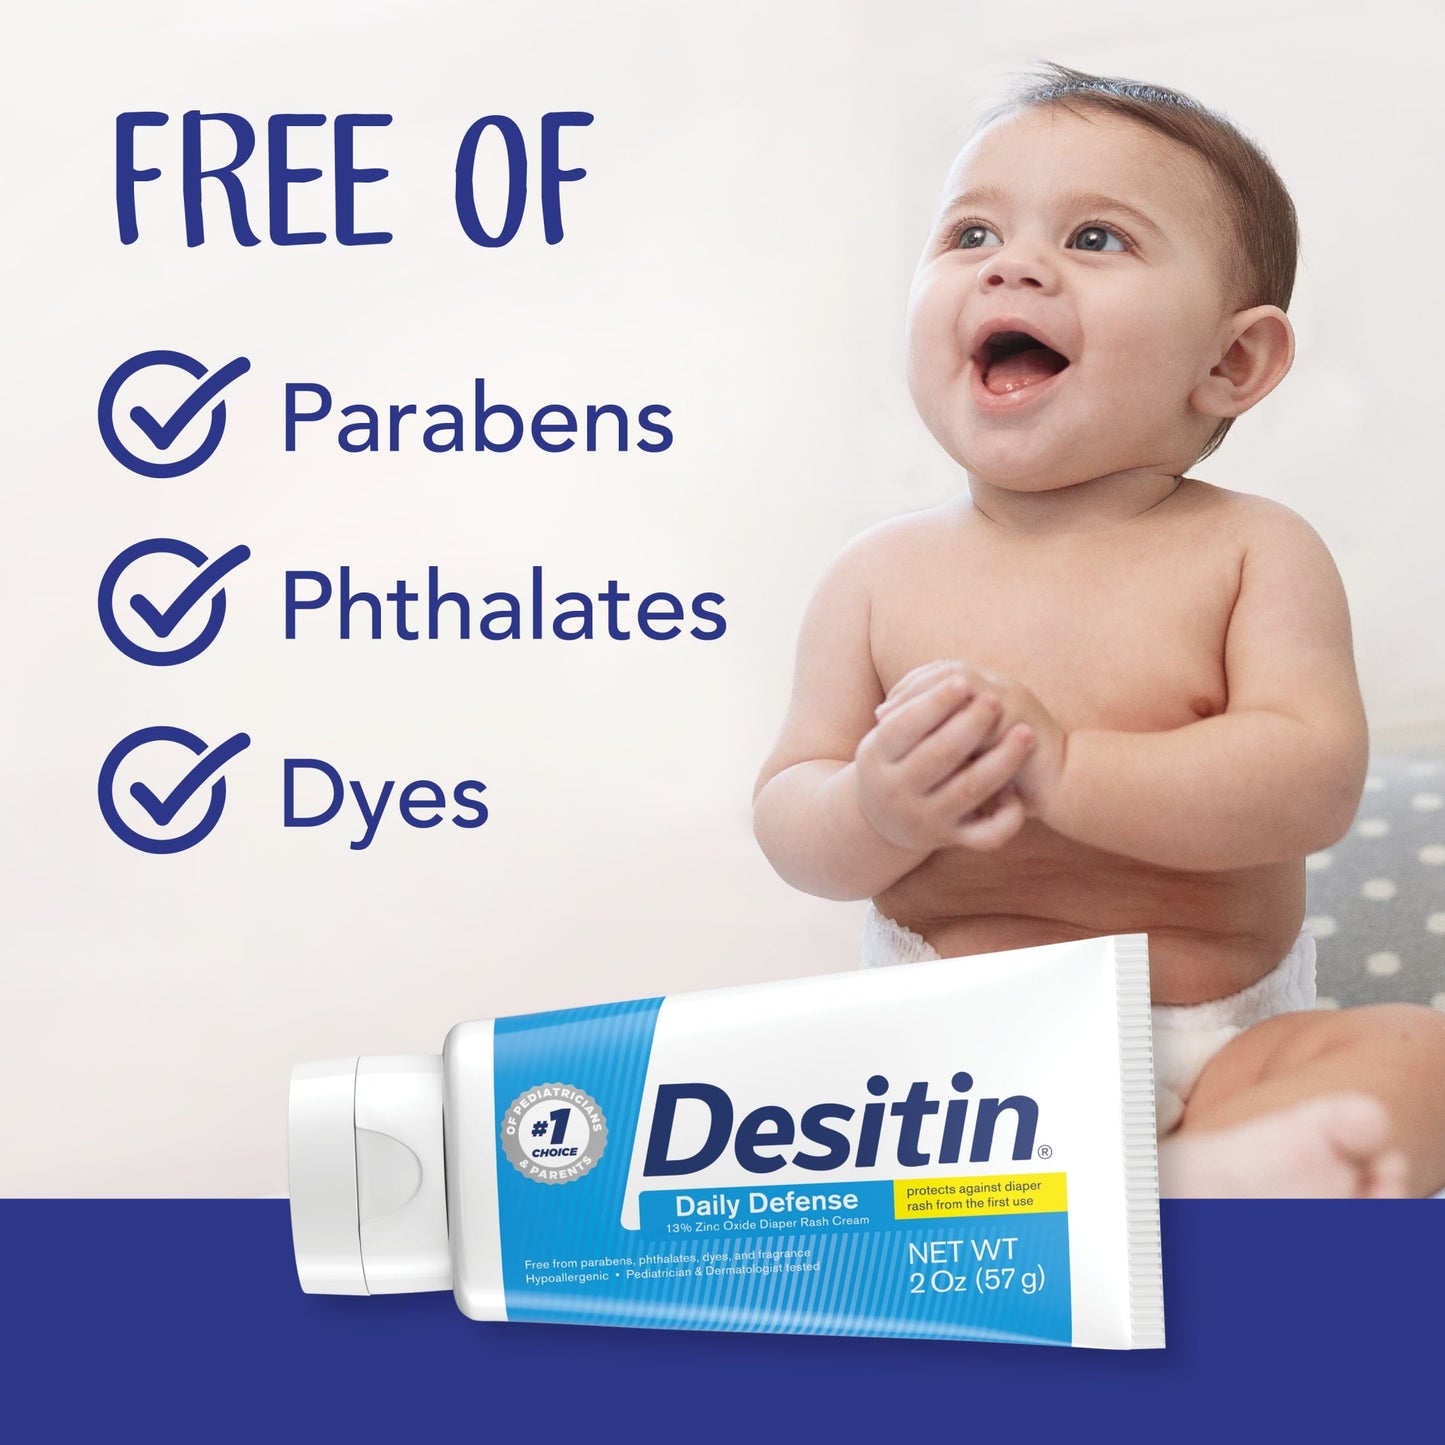 Desitin Daily Defense Baby Diaper Rash Cream, Butt Paste with 13% Zinc Oxide, 4 oz